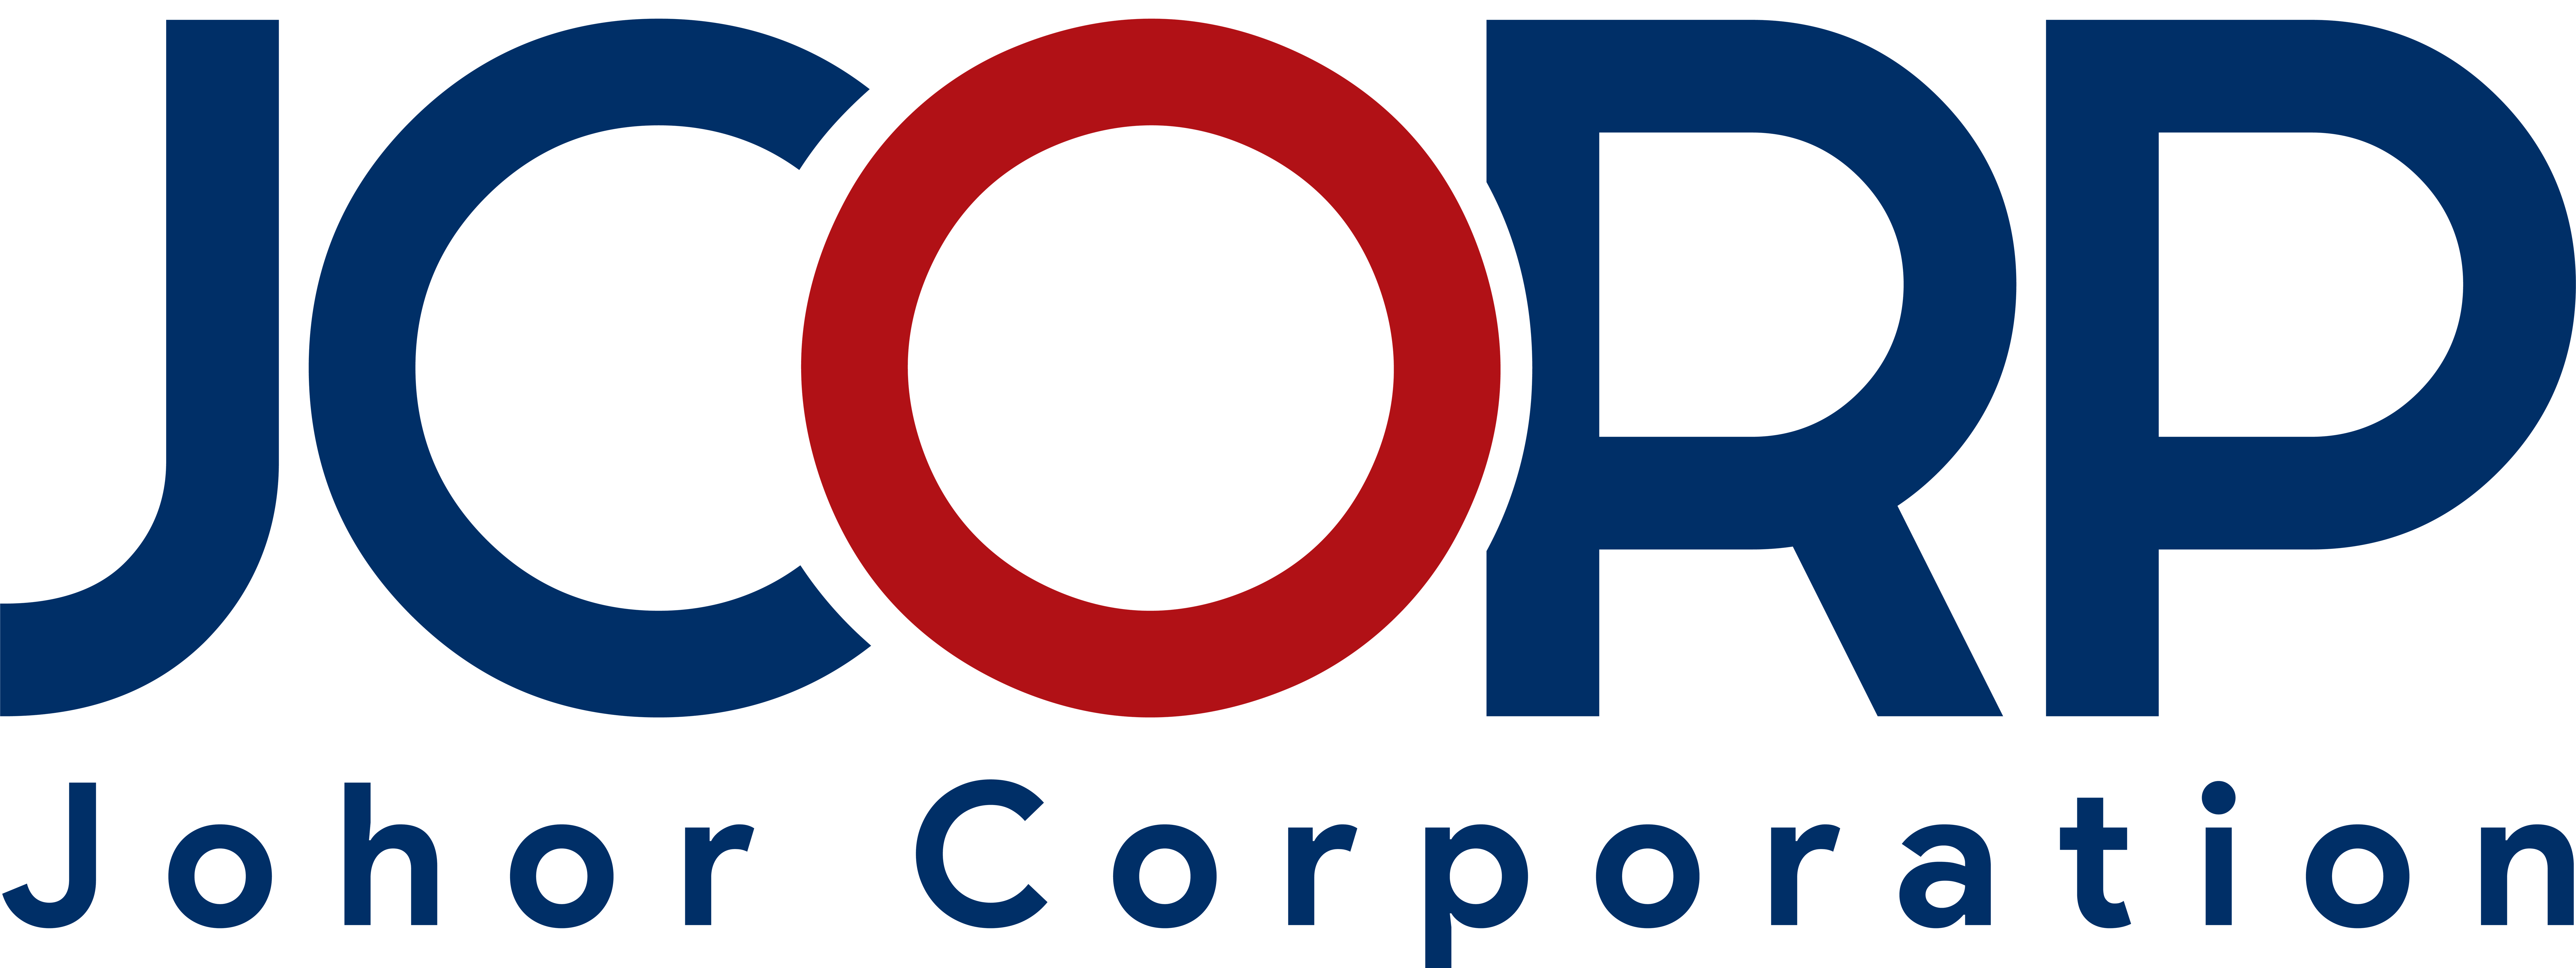 Johor Corporation Wikipedia